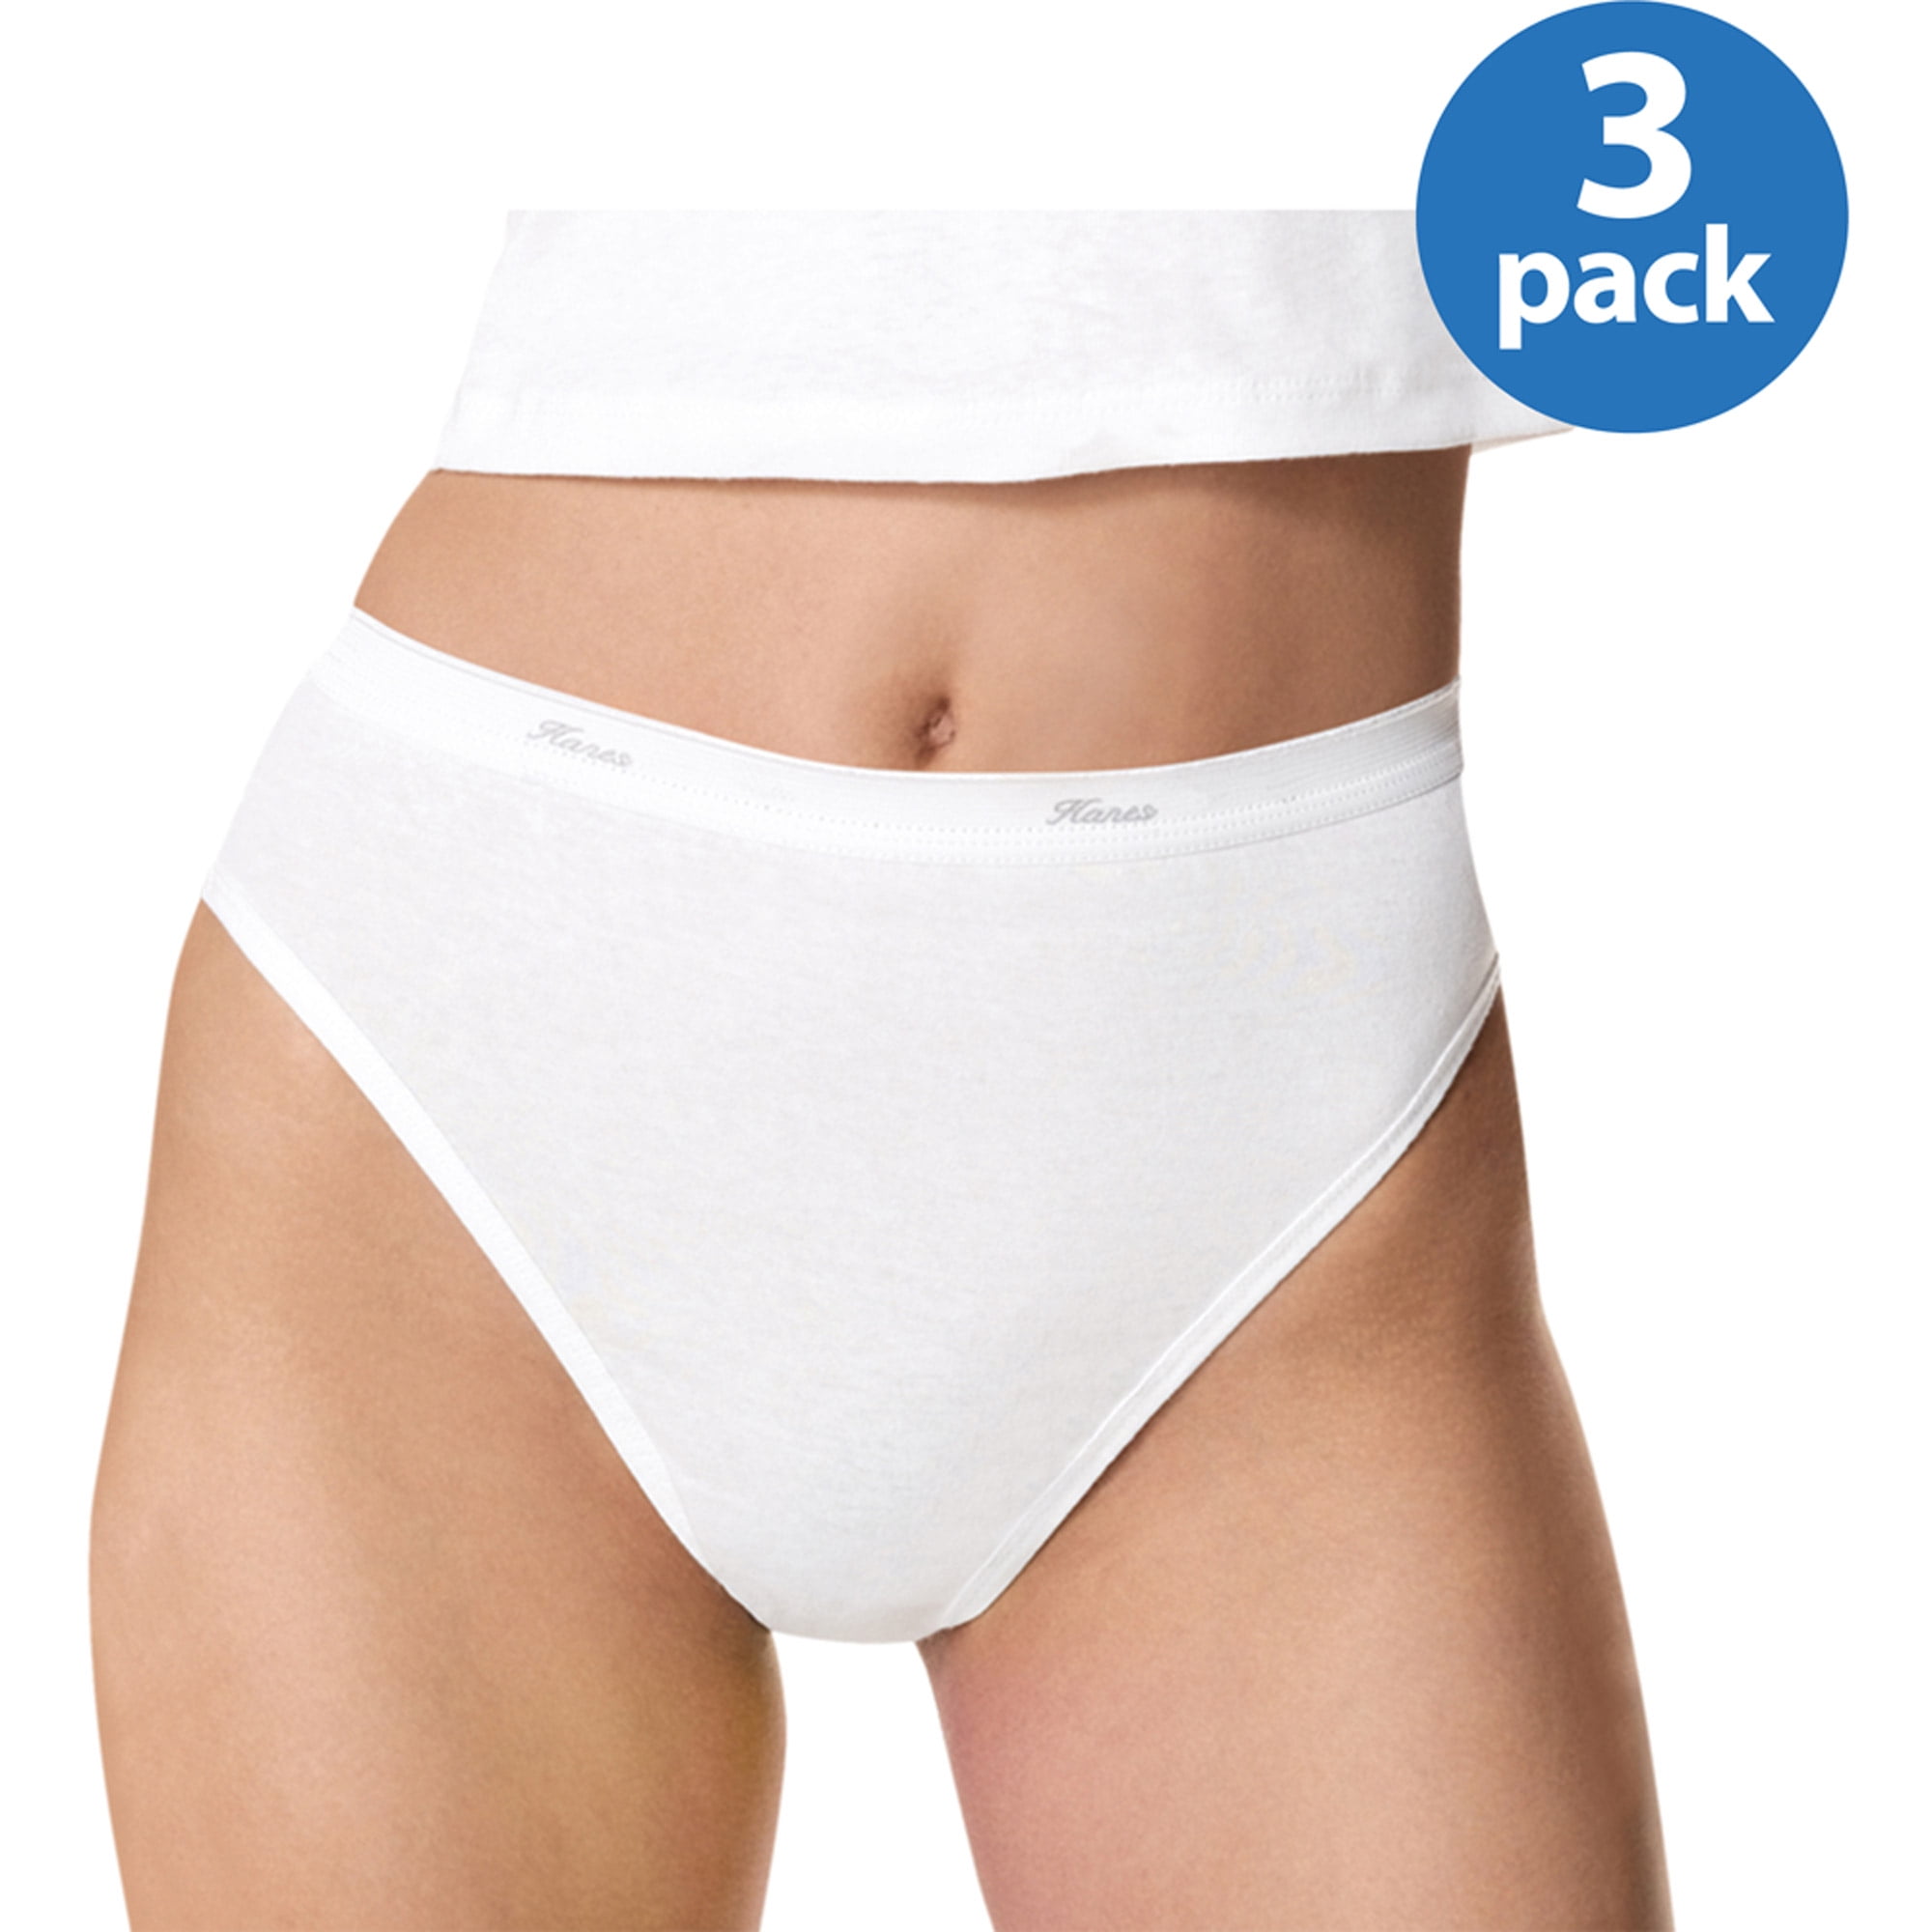 Hanes Women 3 Pack Hi-Cuts underwear 